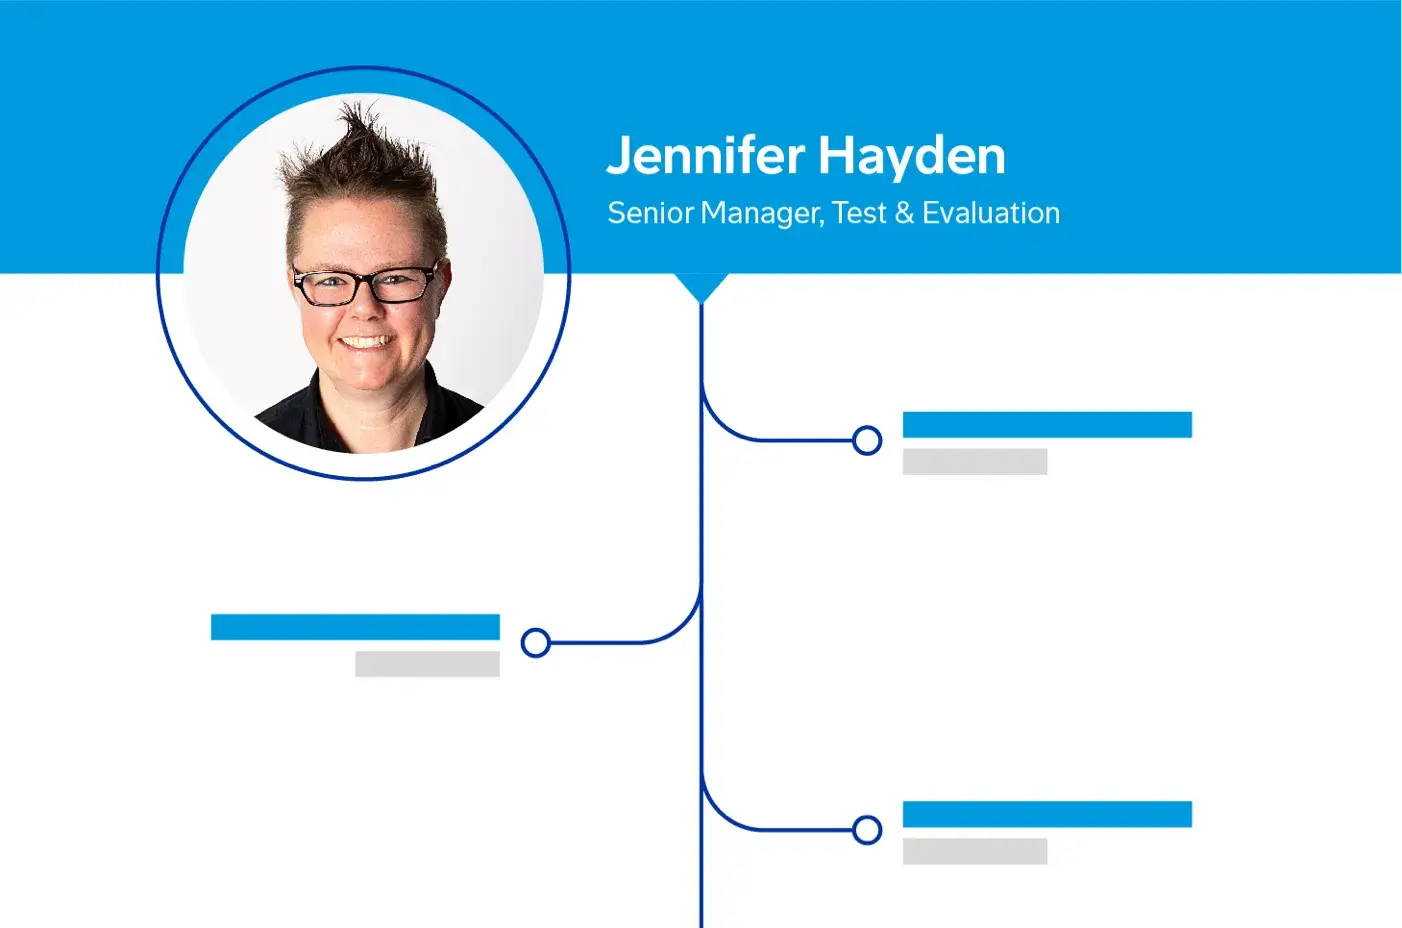 Jennifer Hayden career path video